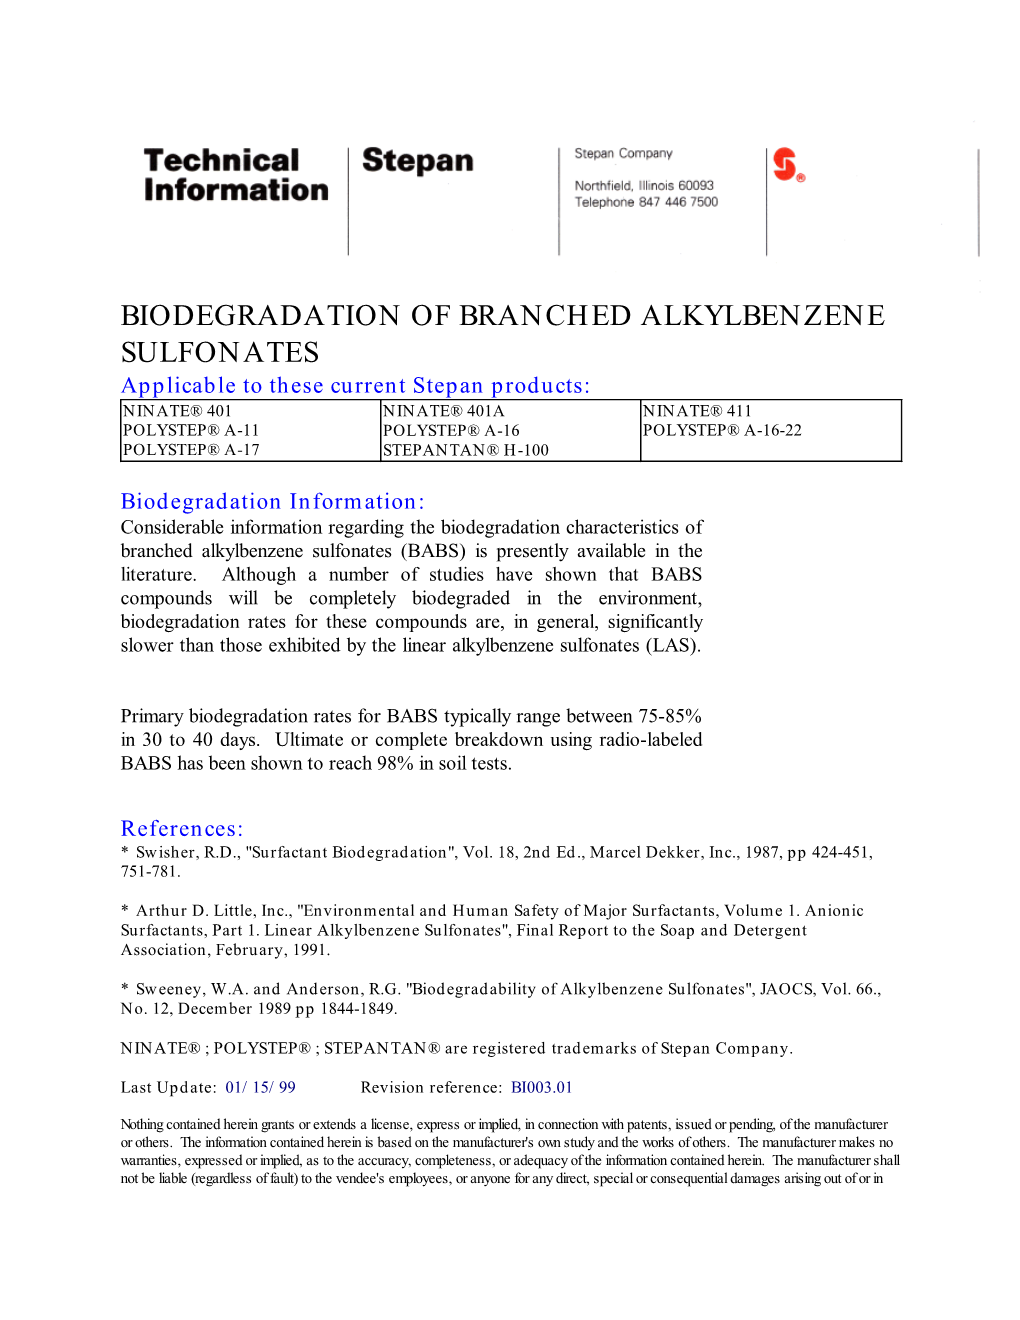 Biodegradation of Branched Alkylbenzene Sulfonates